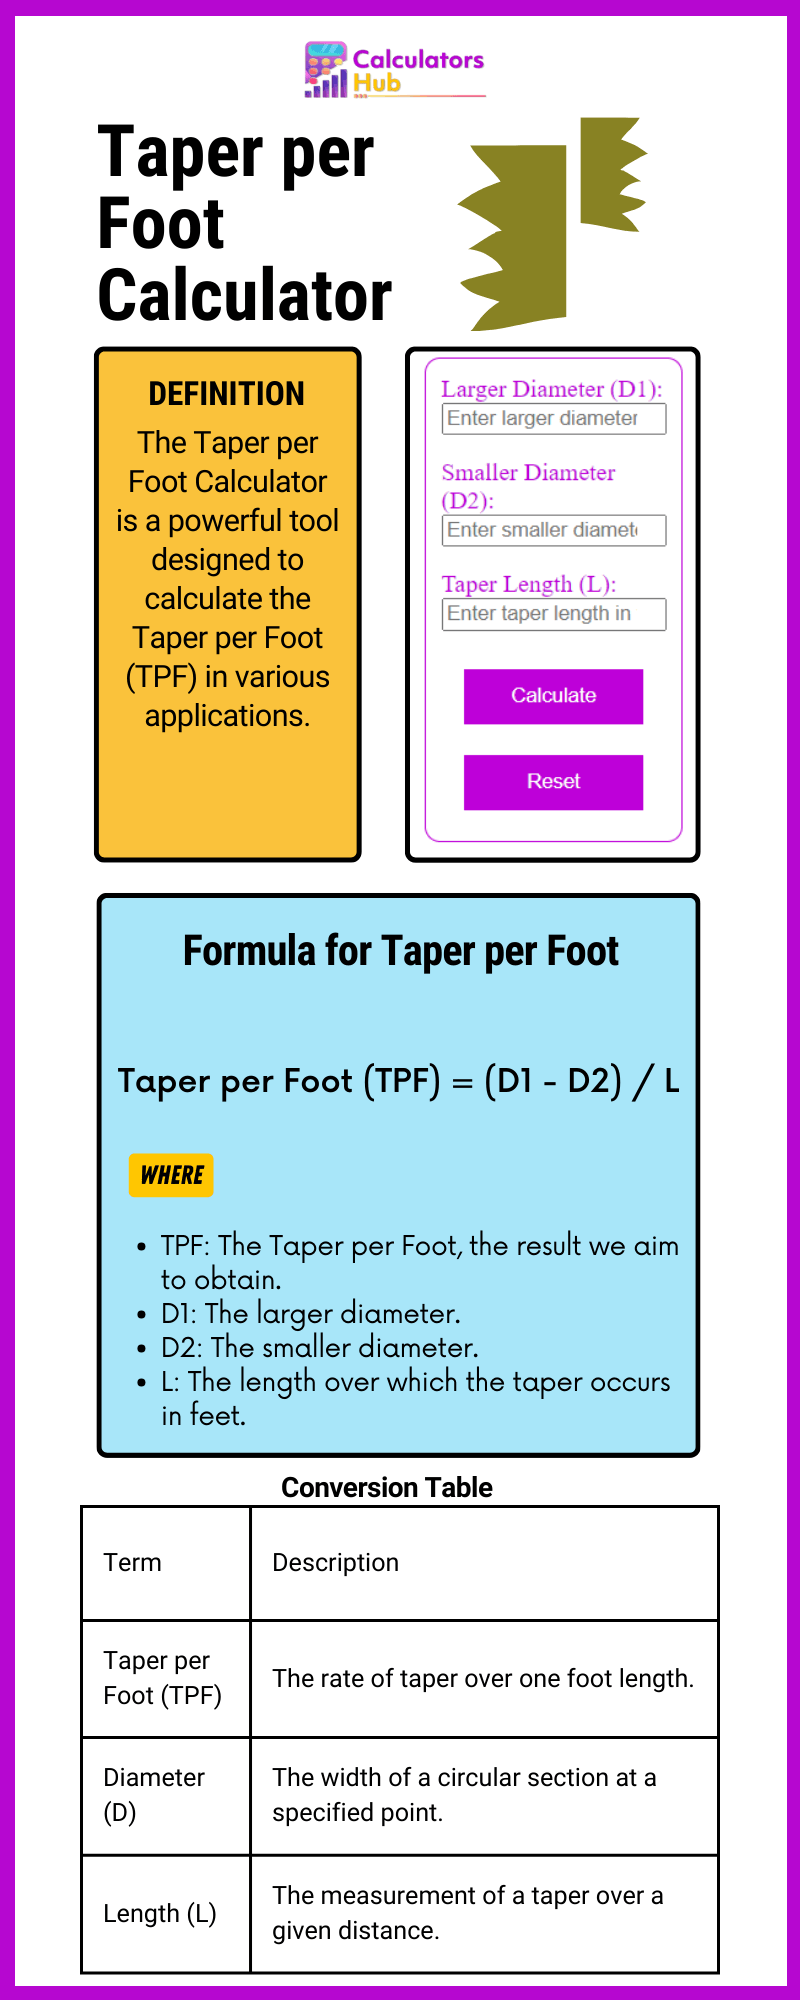 Taper per Foot Calculator